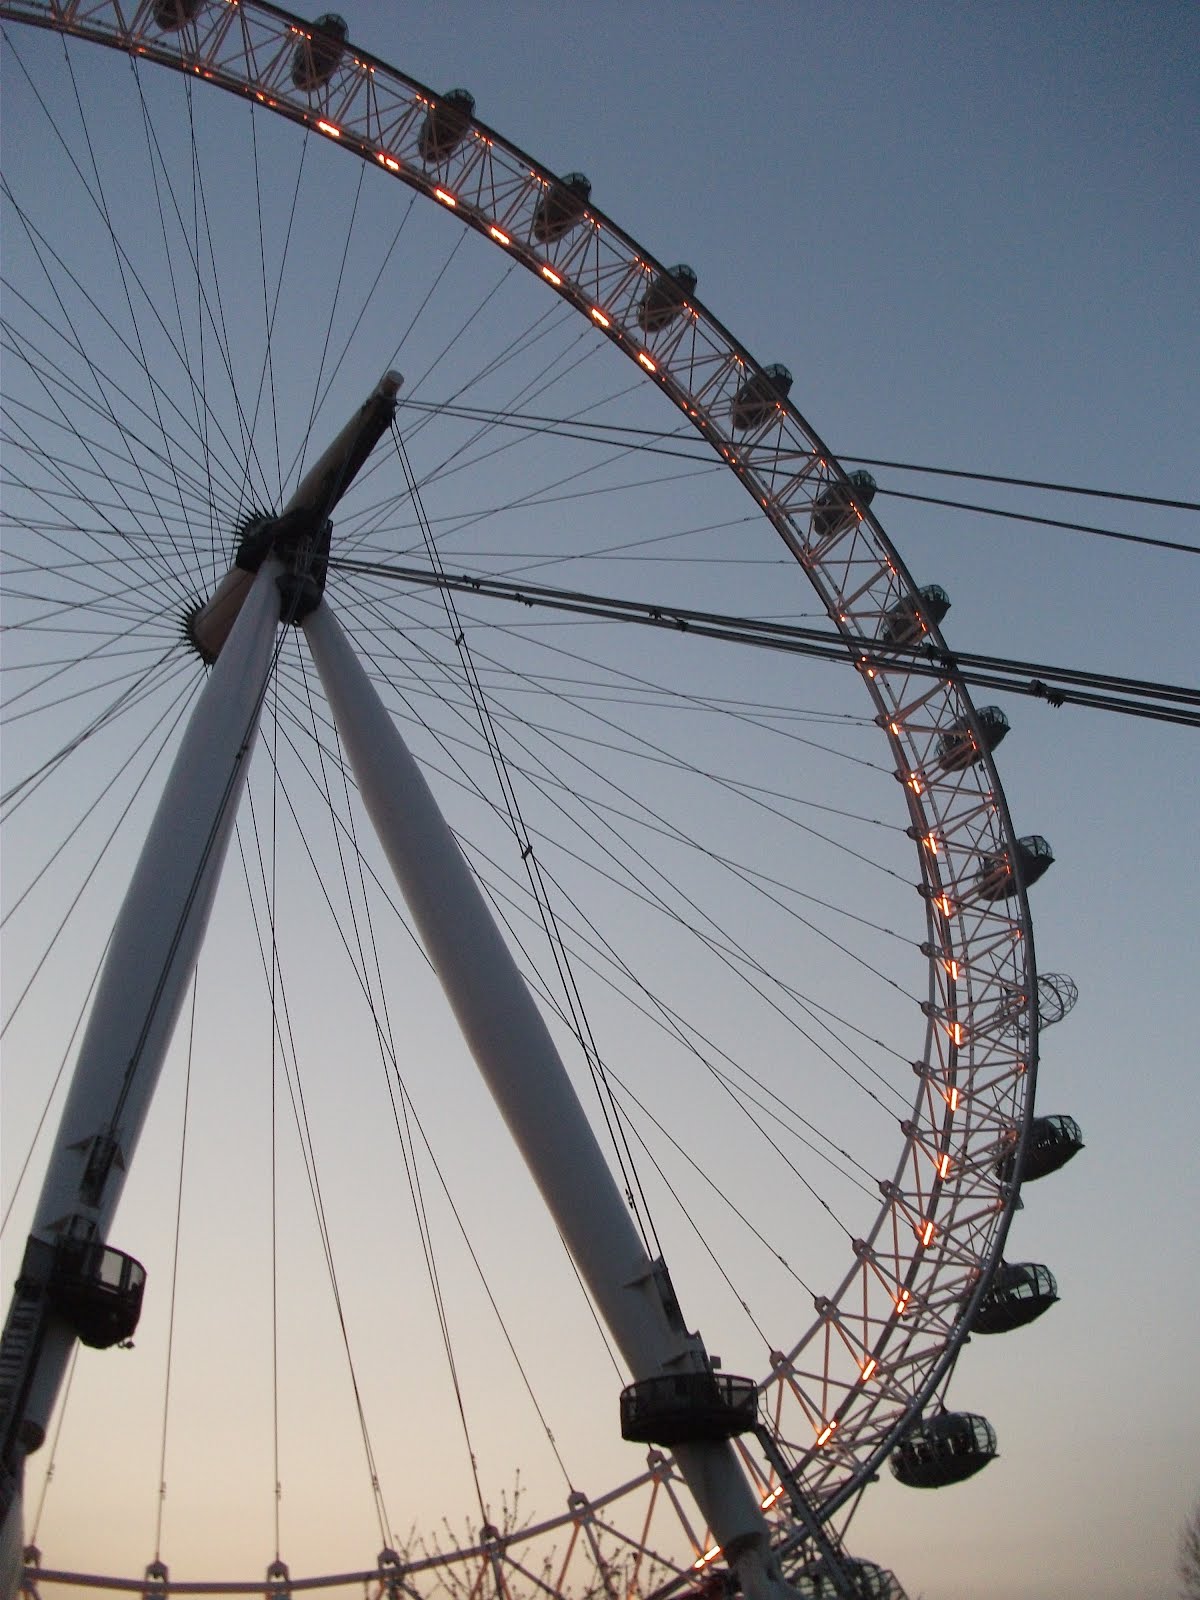 Ride The London Eye I Spy Wallpaper | PicsWallpaper.com